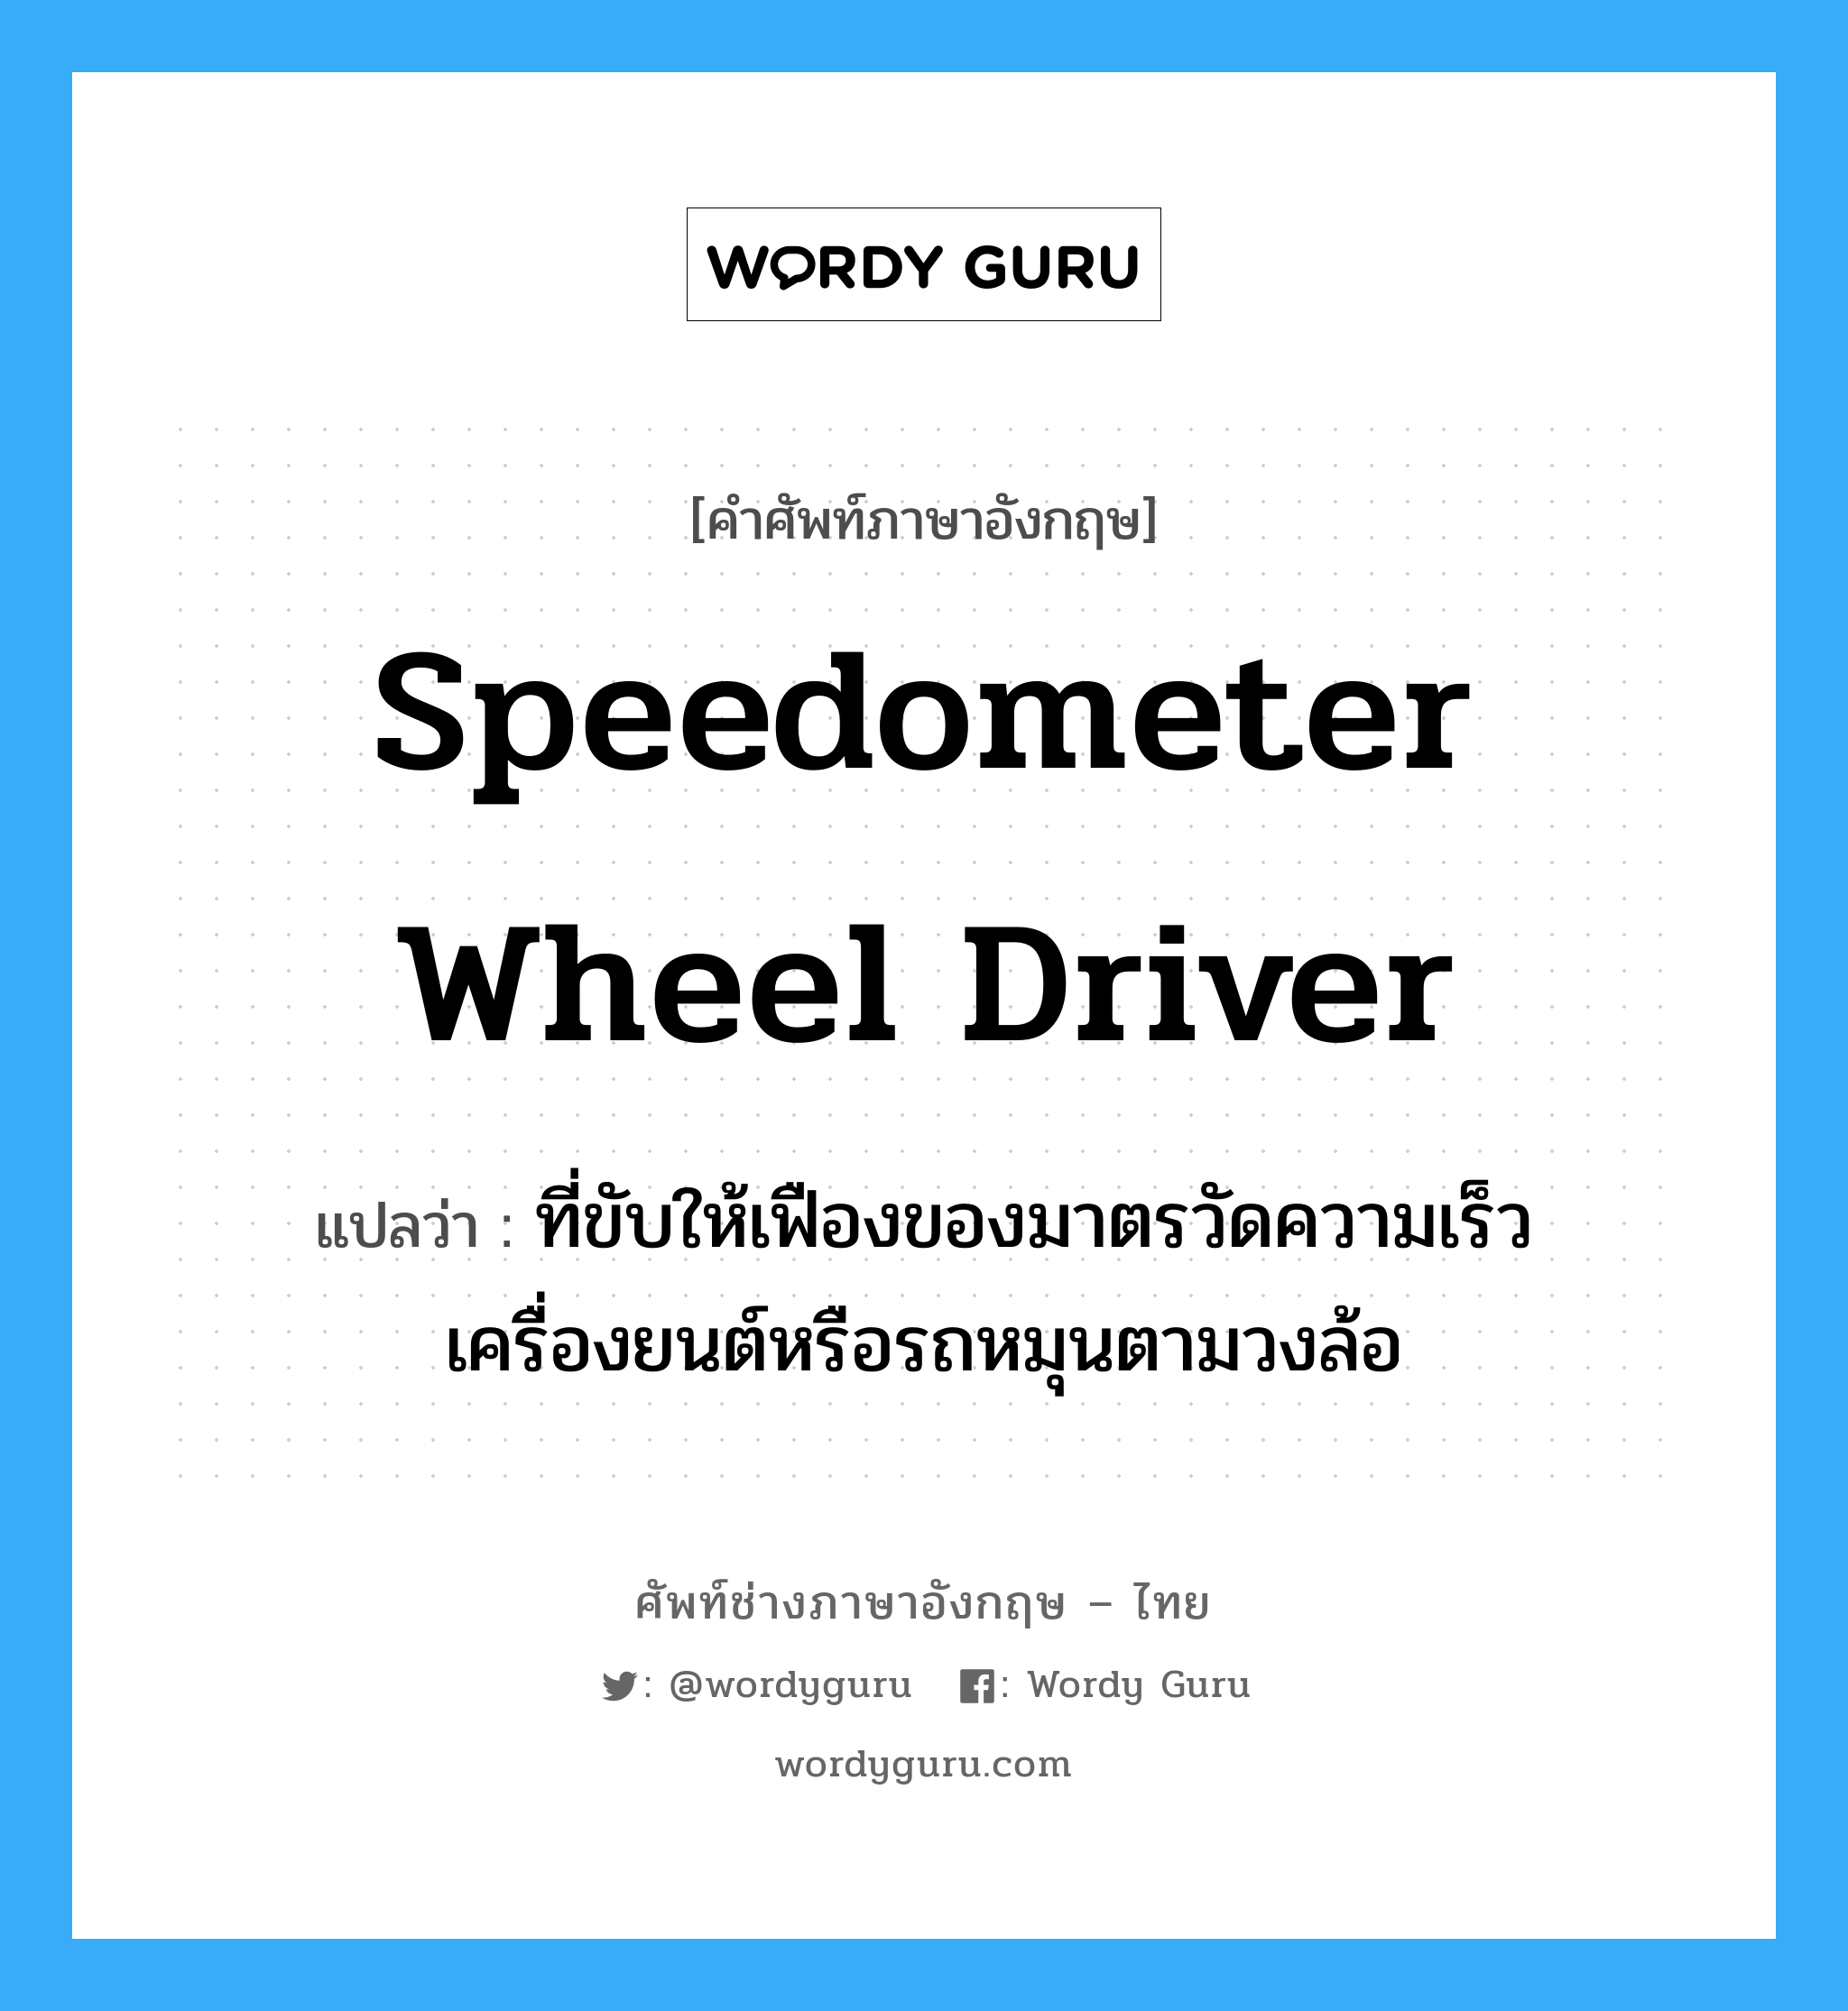 speedometer wheel driver แปลว่า?, คำศัพท์ช่างภาษาอังกฤษ - ไทย speedometer wheel driver คำศัพท์ภาษาอังกฤษ speedometer wheel driver แปลว่า ที่ขับให้เฟืองของมาตรวัดความเร็วเครื่องยนต์หรือรถหมุนตามวงล้อ